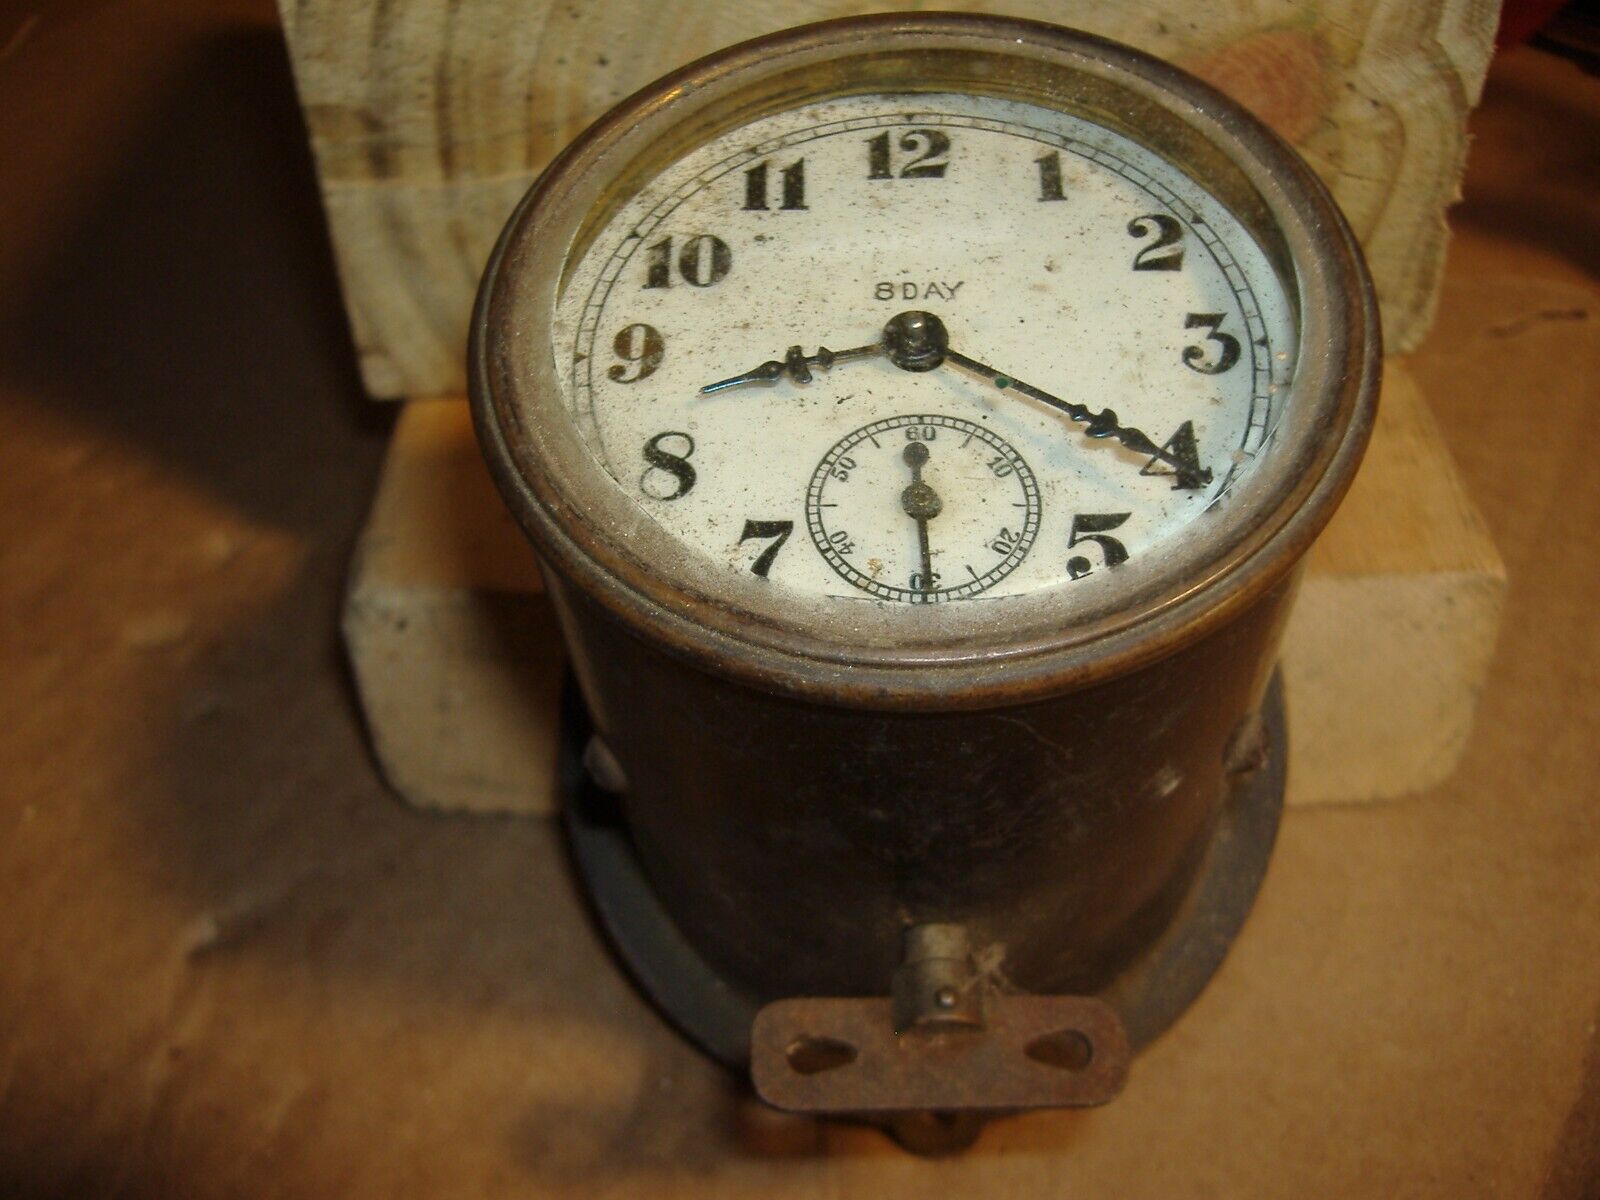 Antique Sessions 8 Day Automobile Clock - Dash Mount - Broken mainspring